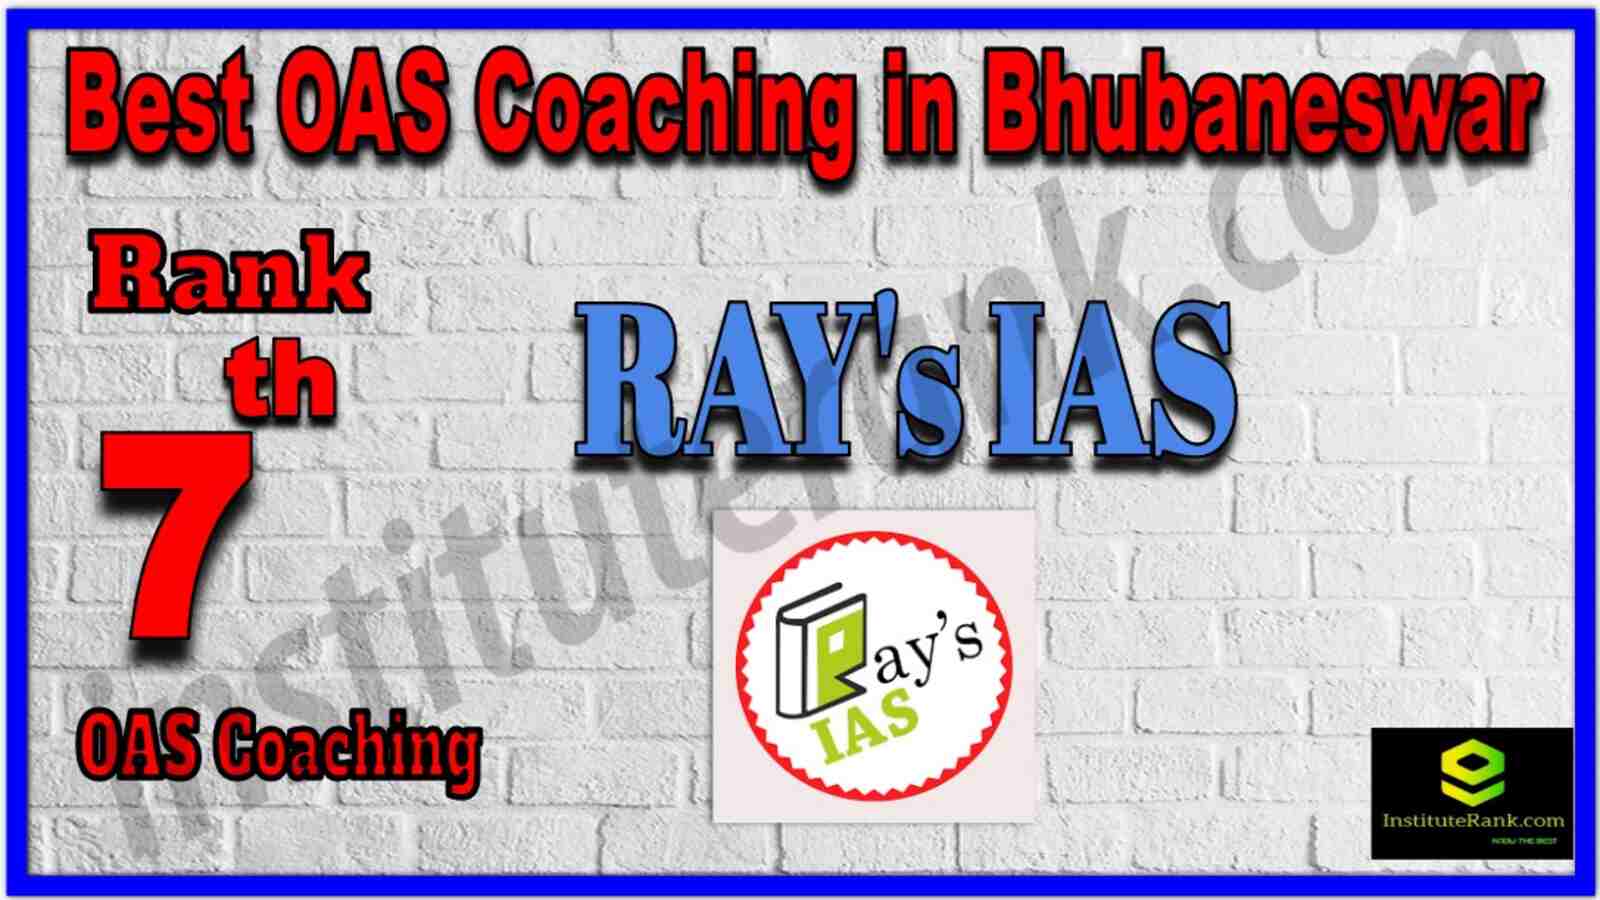 Rank 7 Best OAS Coaching in Bhubaneswar